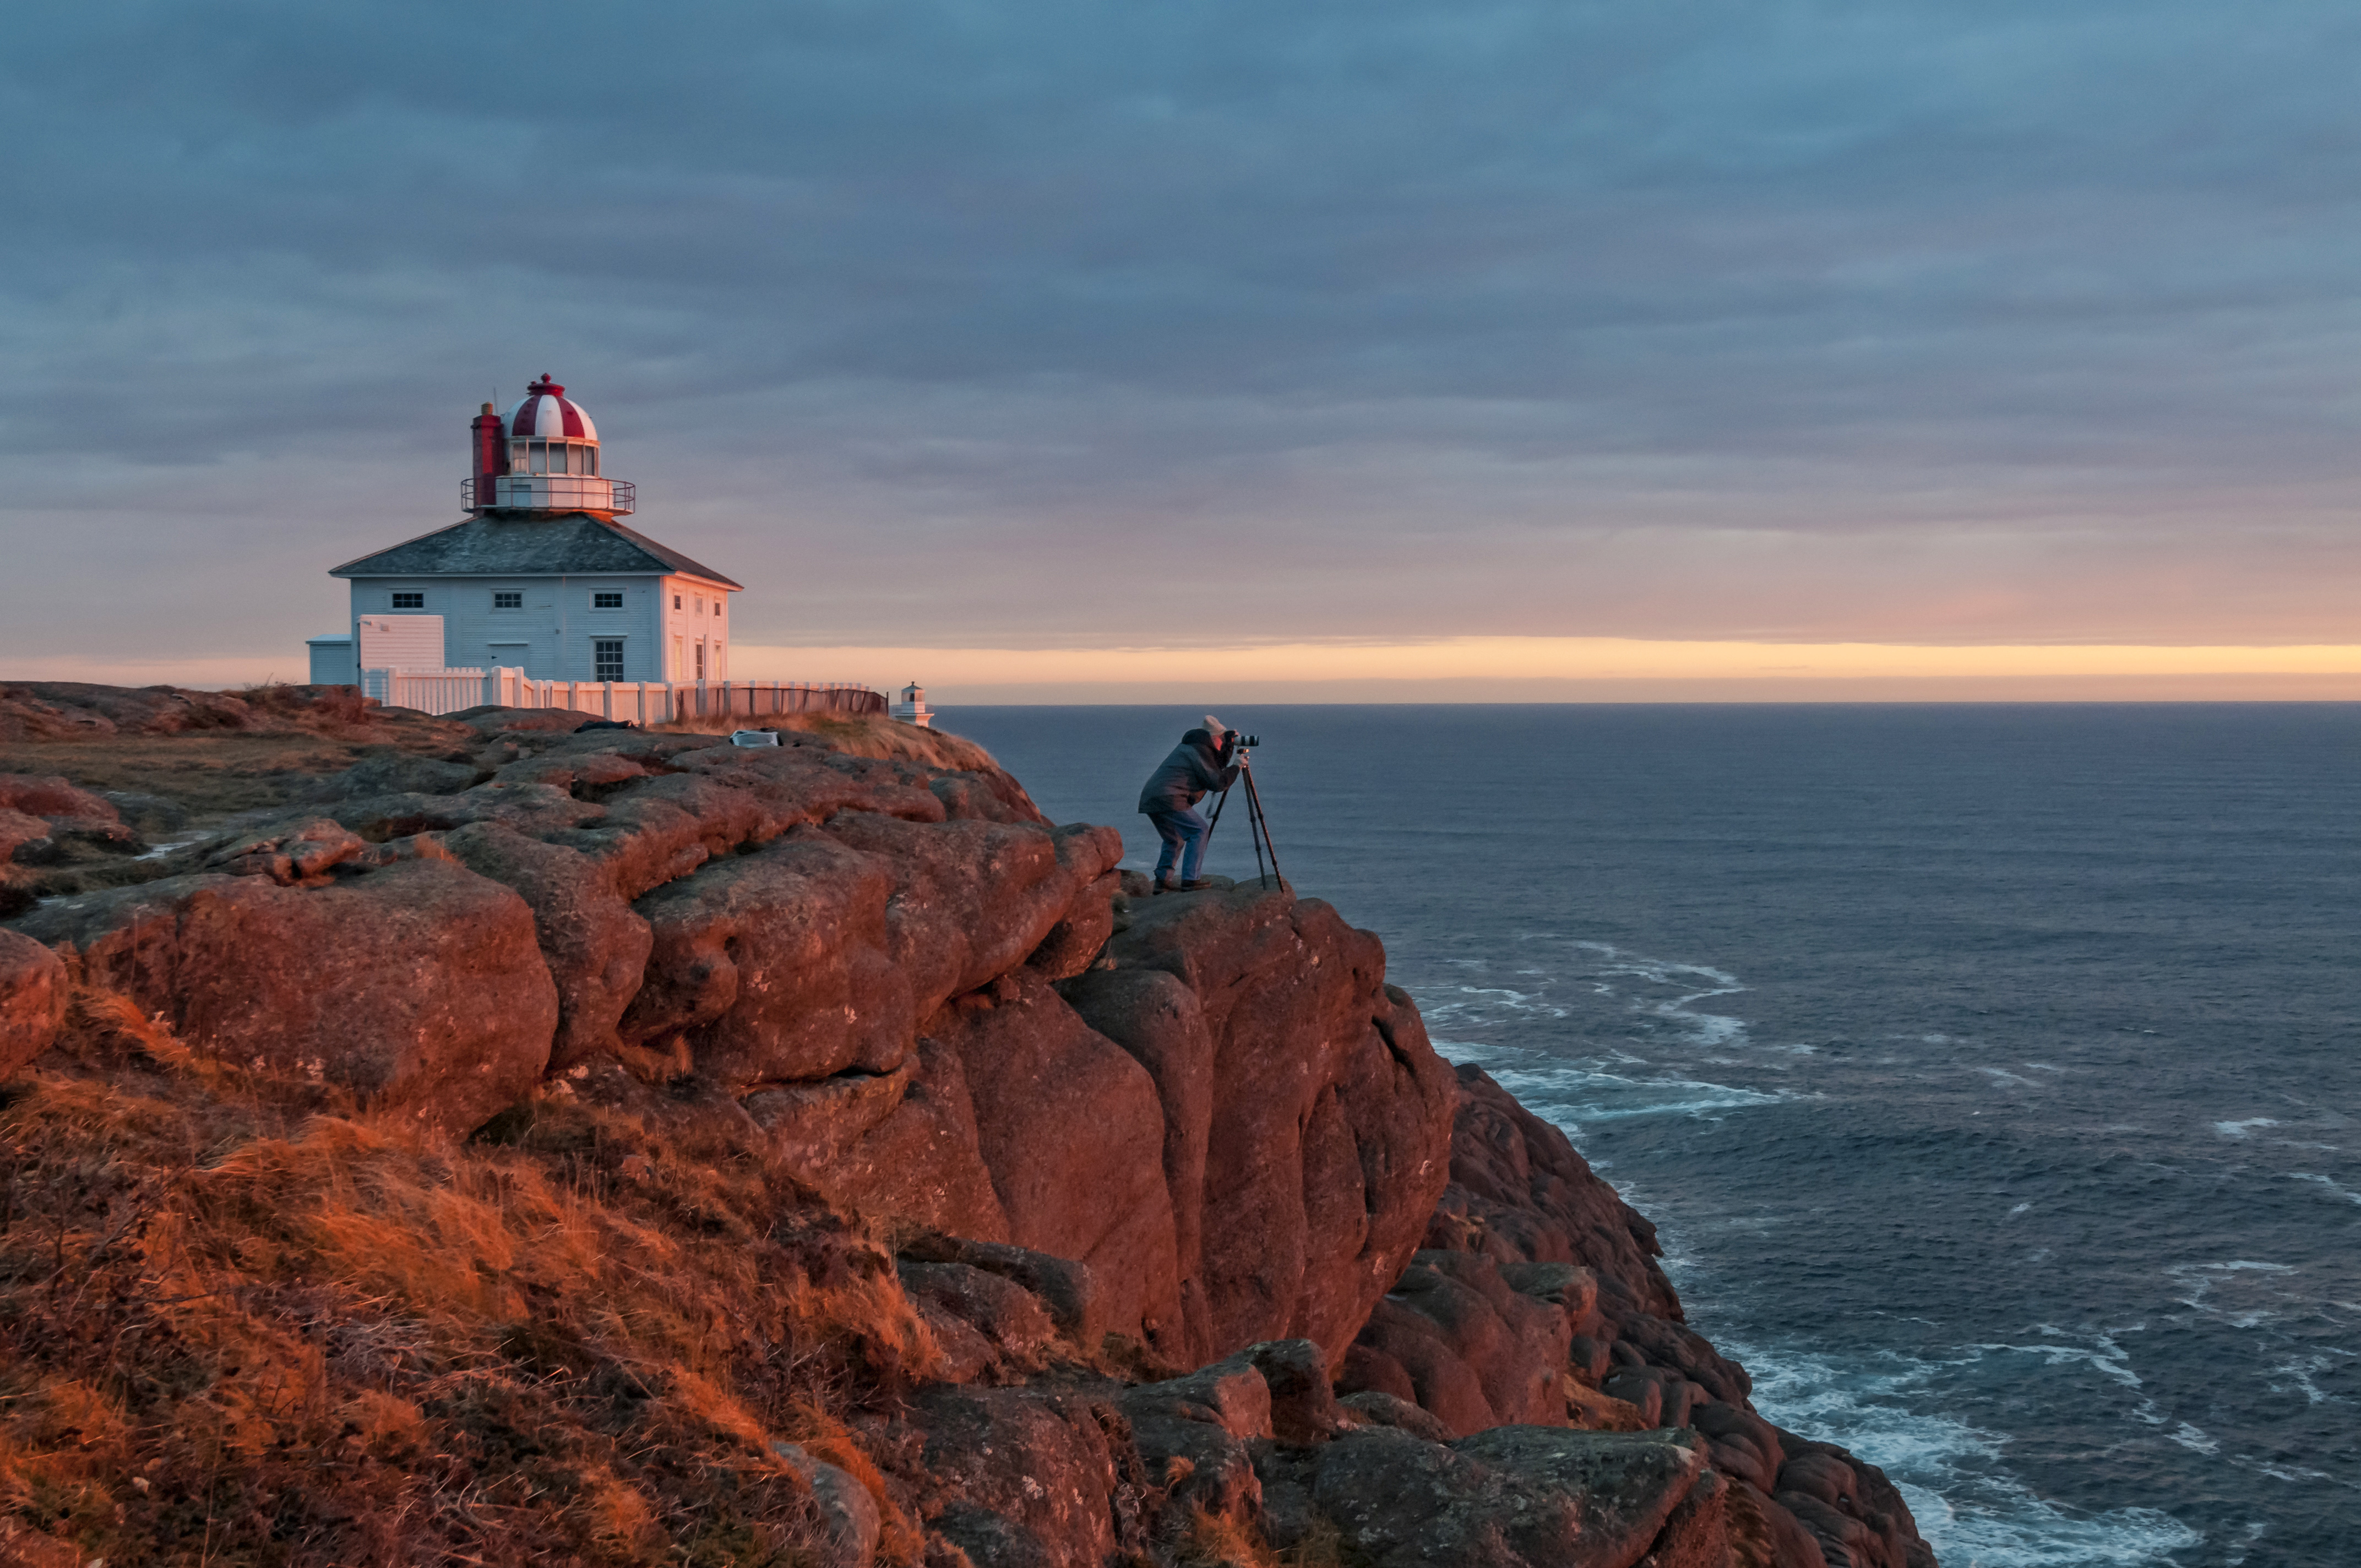 Sunrise At Cape Spear Photo Tour - Far East Photography Tours, St. John's, Newfoundland & Labrador